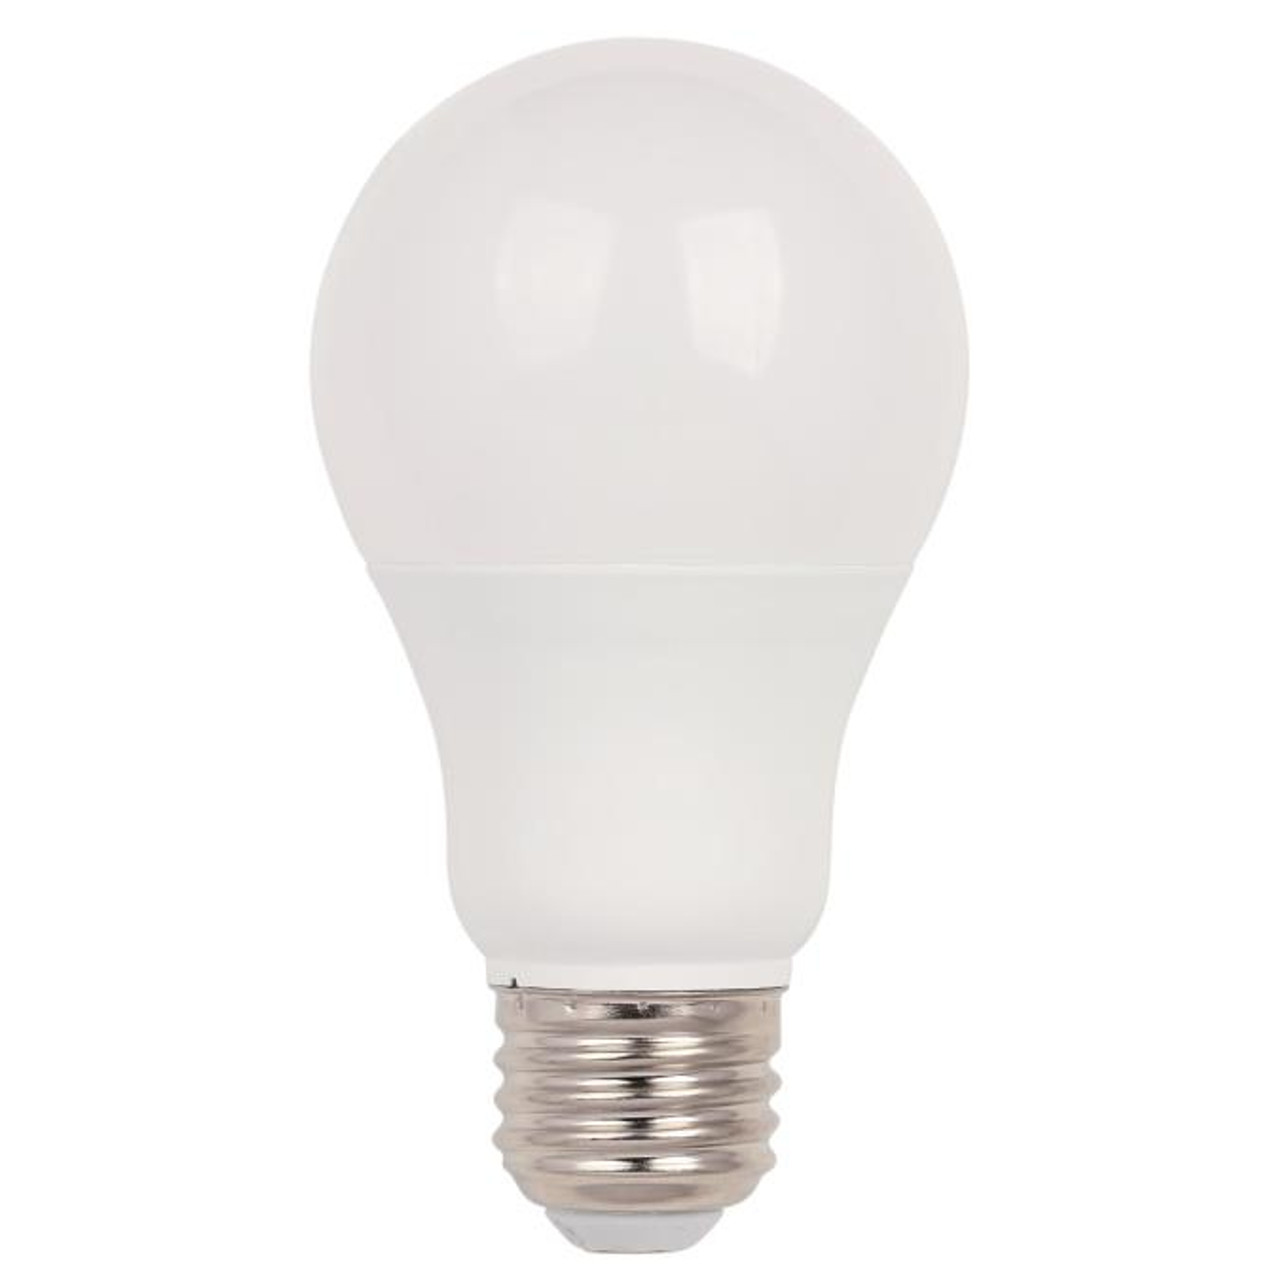 Westinghouse 5195100 11 (75 Watt Omni A19 Dimmable LED Light Bulb 2700K Soft White